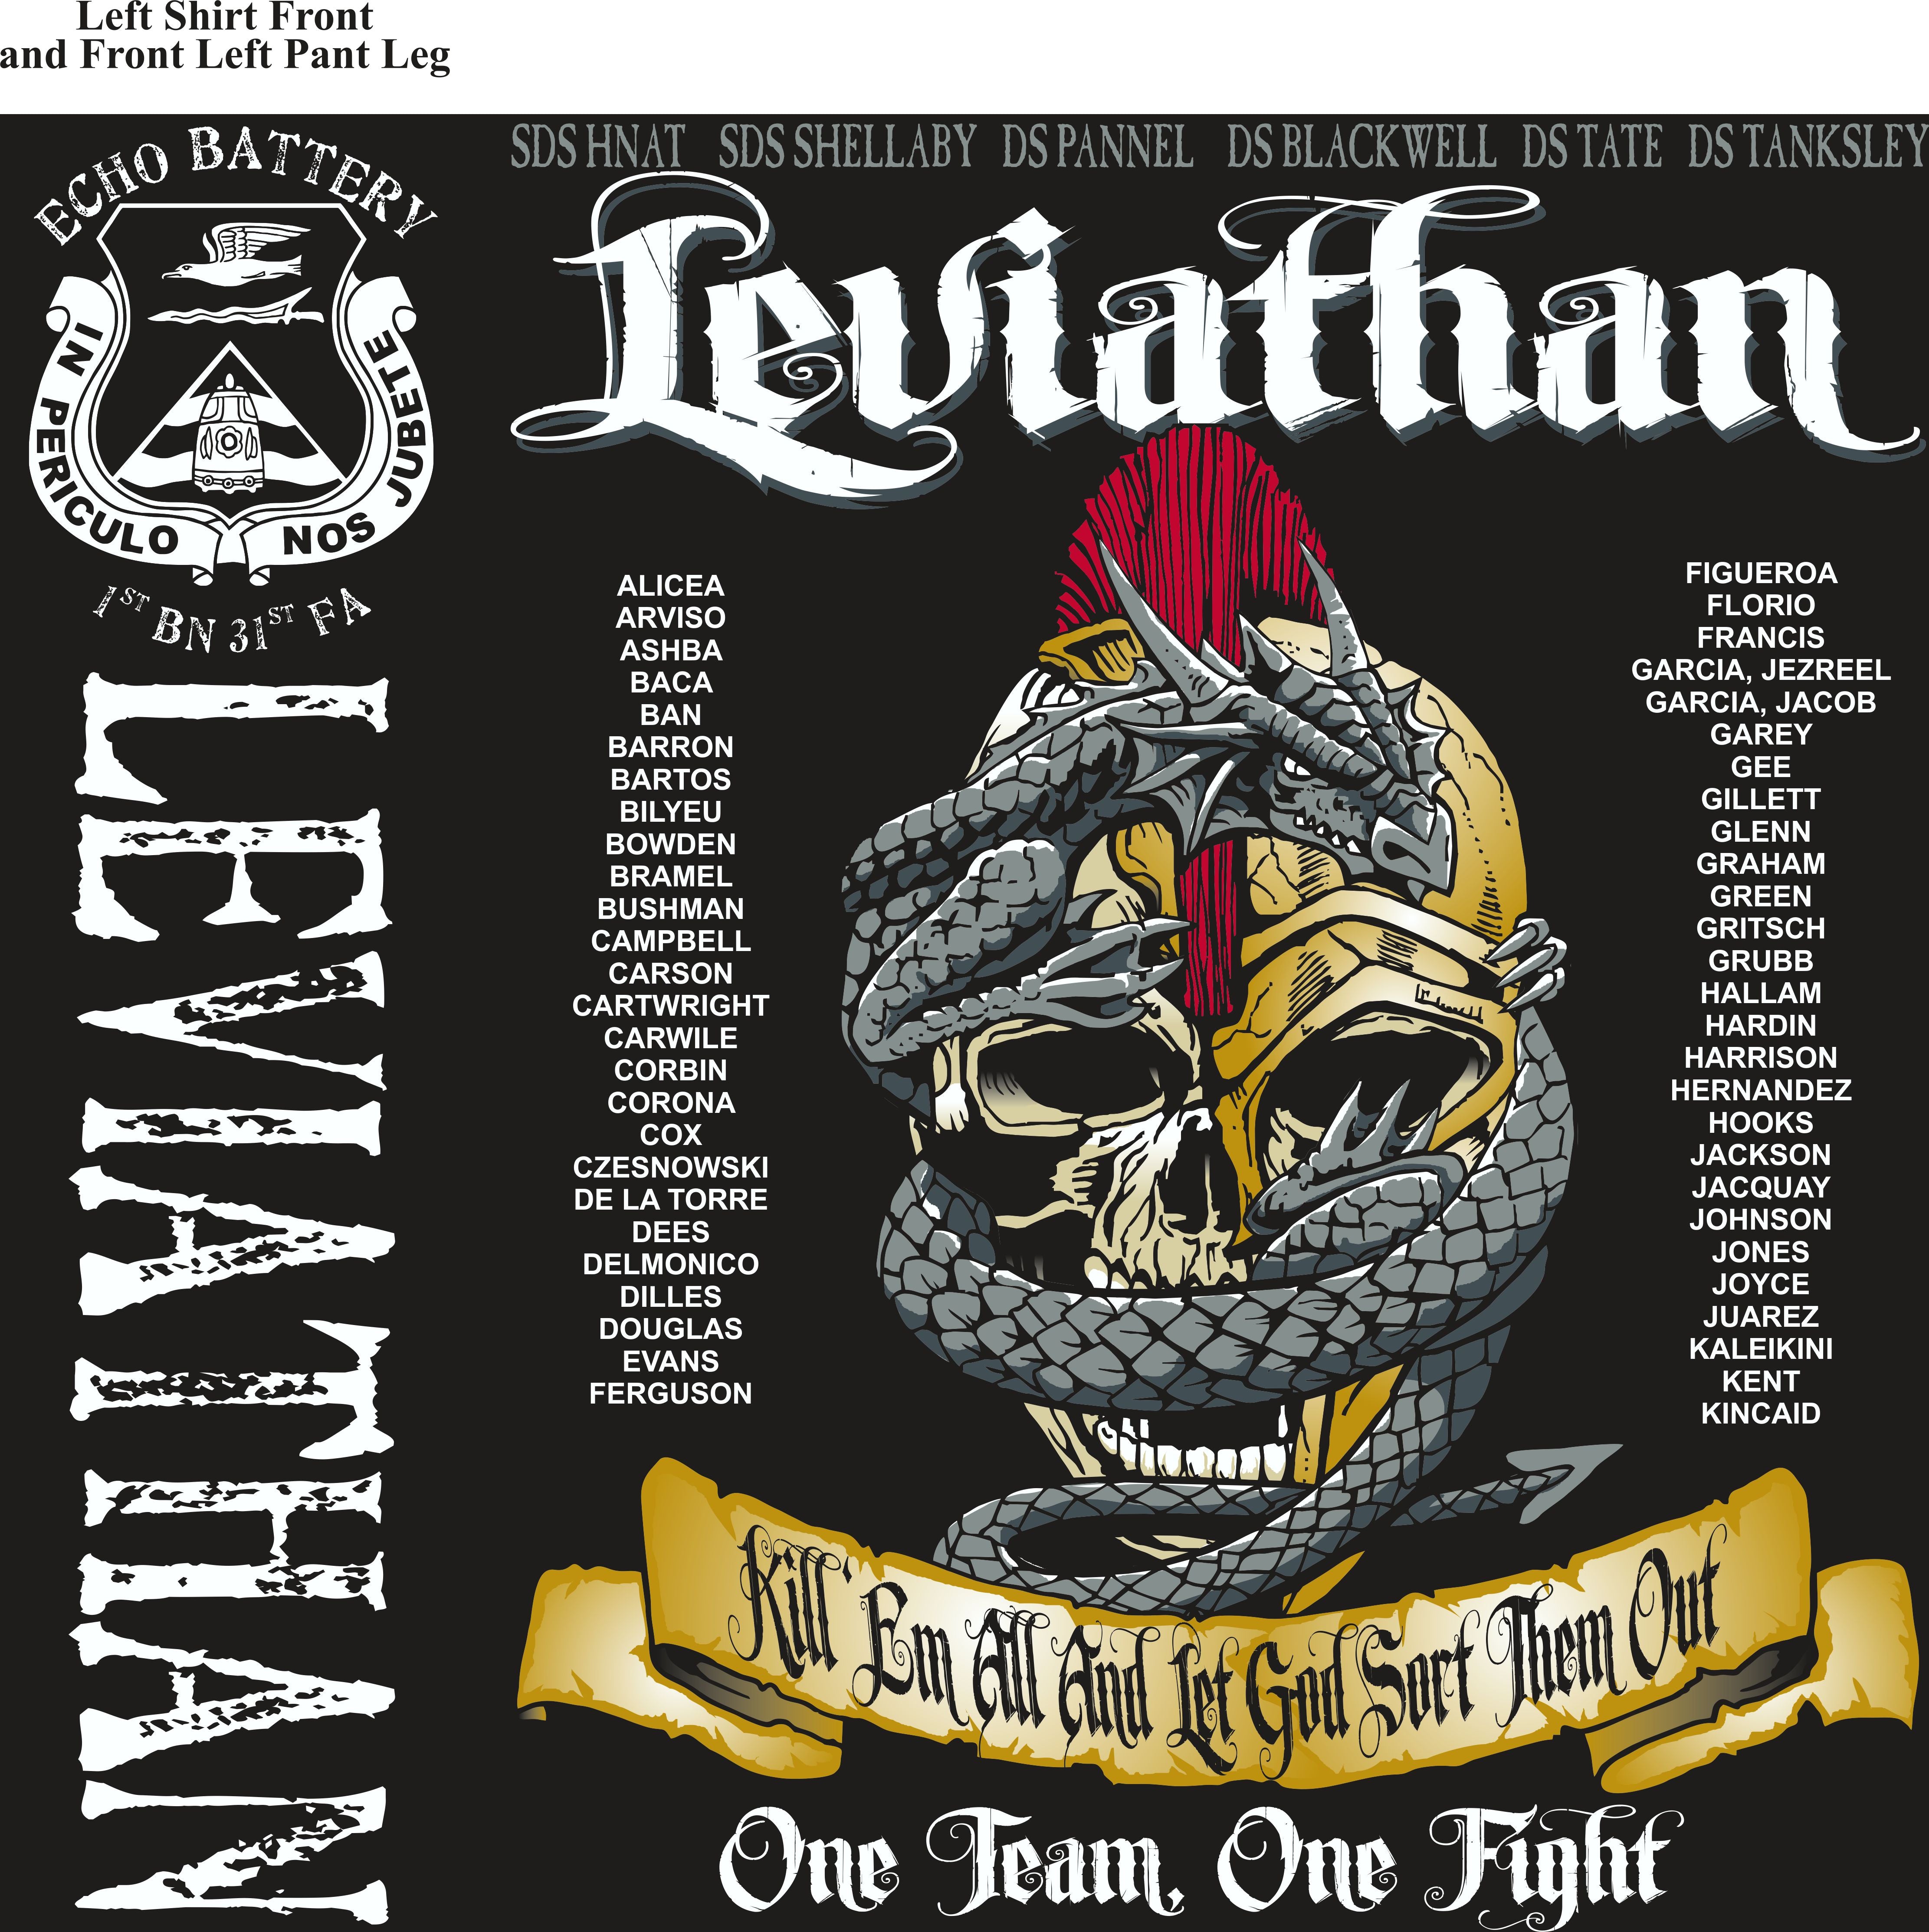 Platoon Shirts (2nd generation print) ECHO 1st 31st LEVIATHAN JUNE 2018